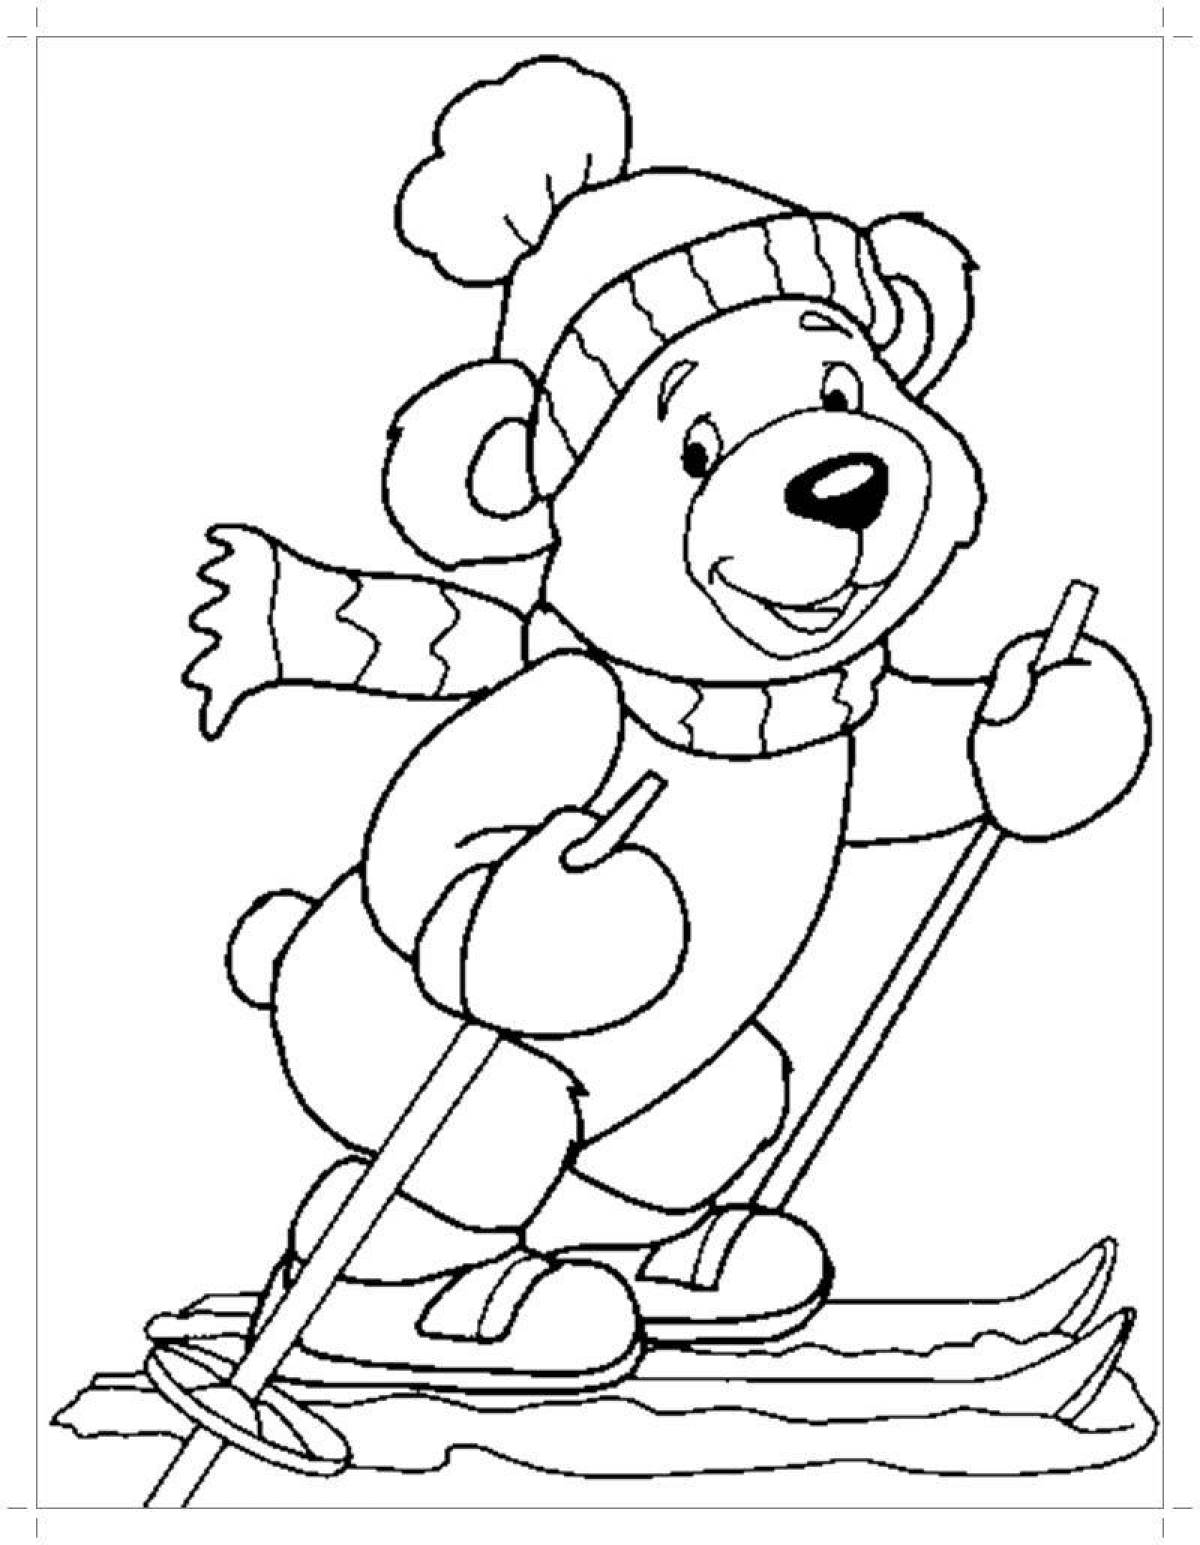 Joyful winter coloring for kids 2 3